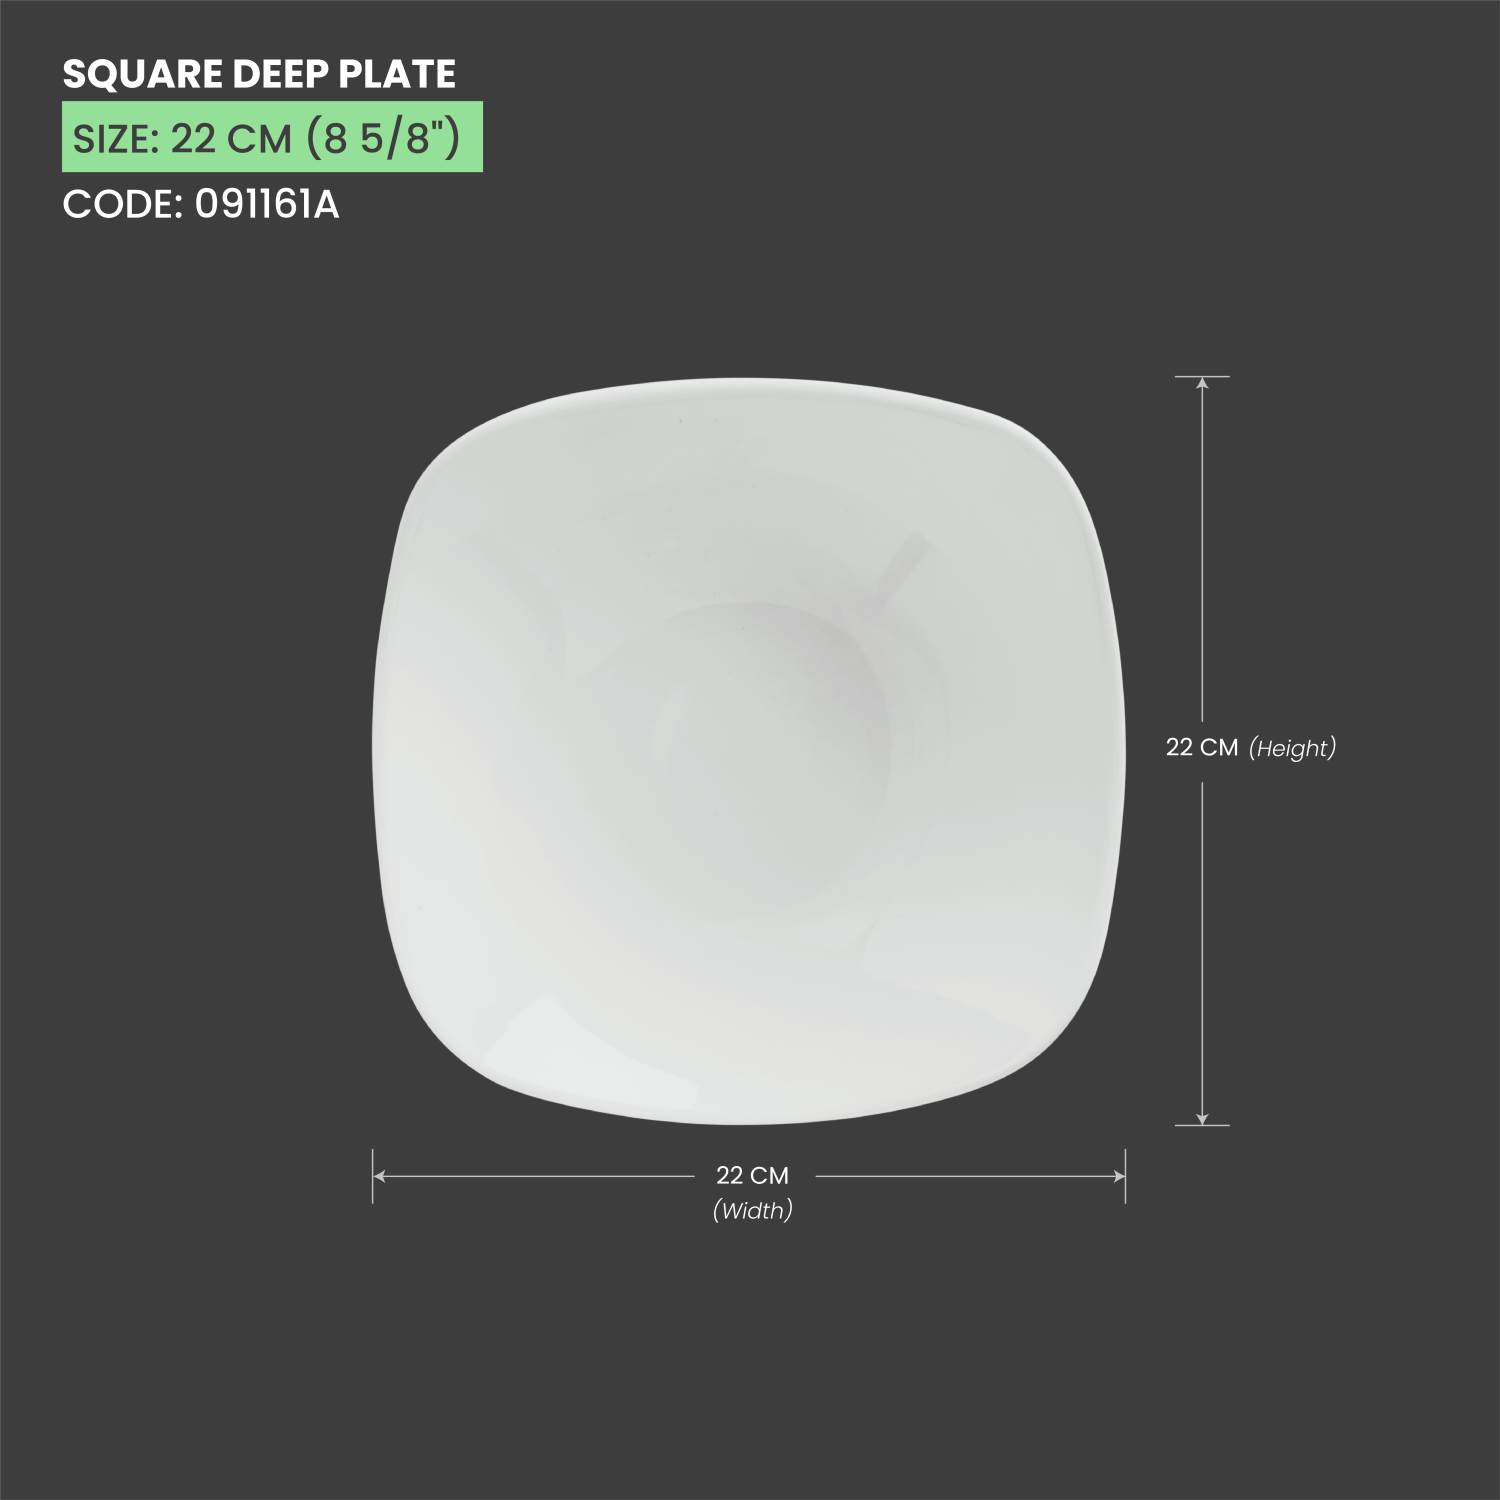 Baralee Simple Plus Square Deep Plate 22 Cm (8 5/8")